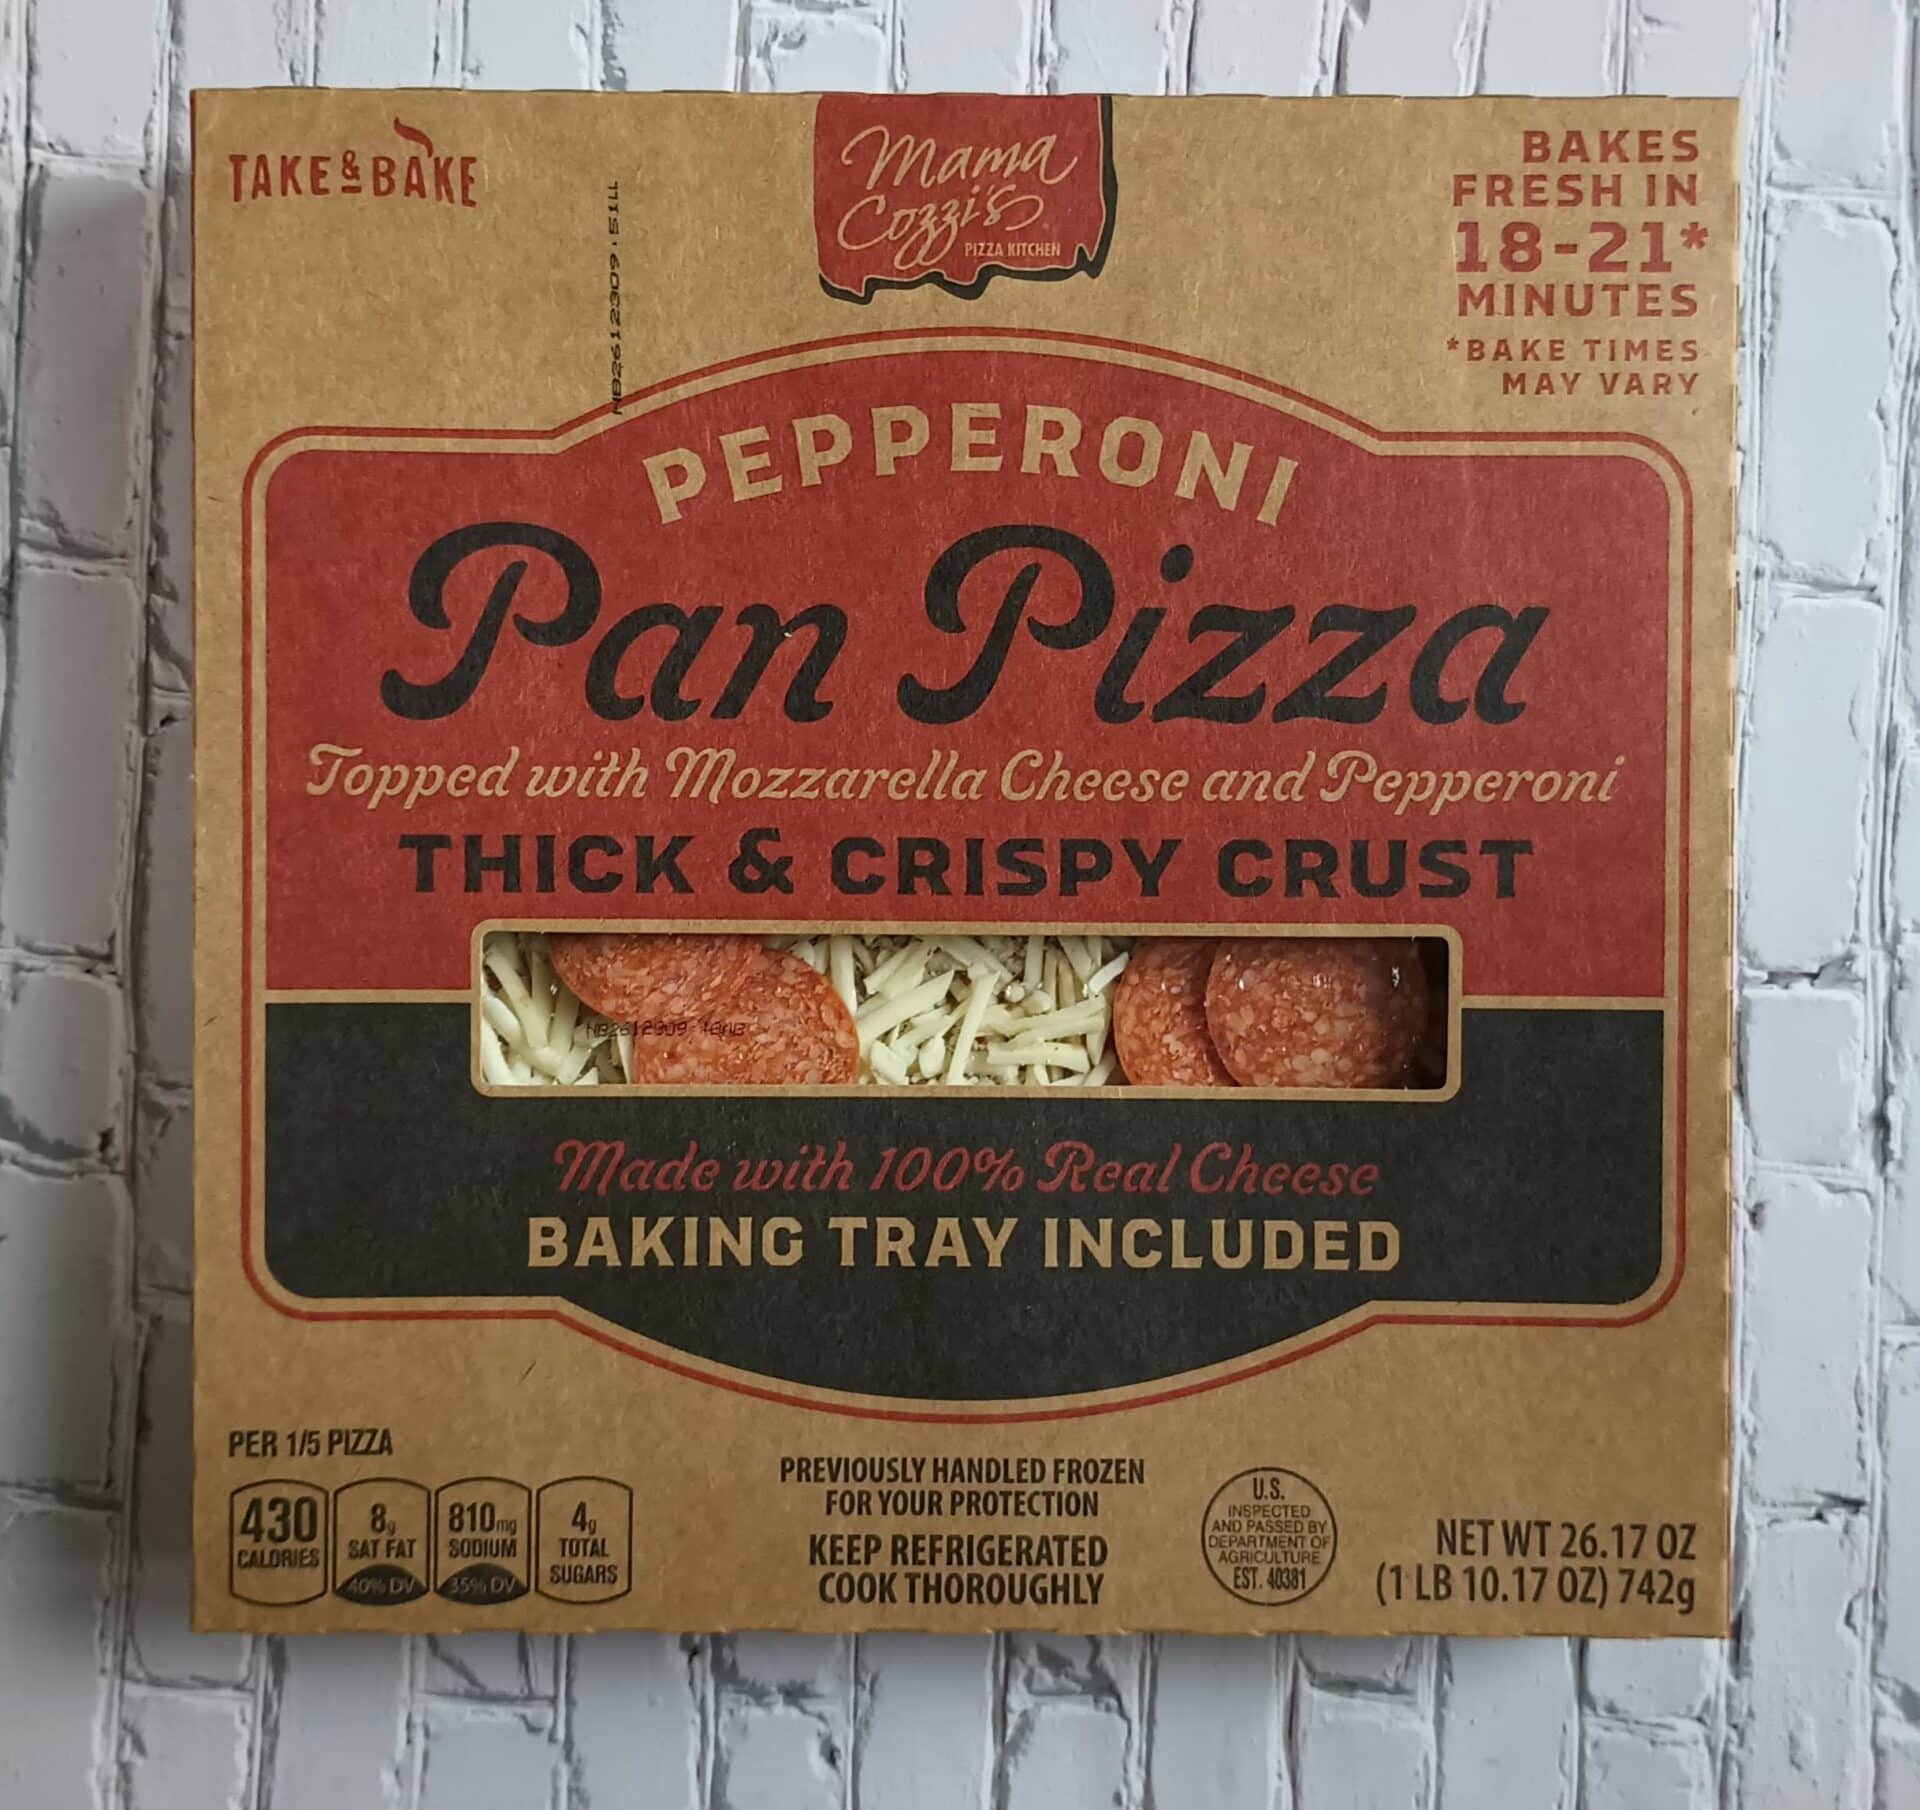 The Mama Cozzi's Take & Bake Pepperoni Pan Pizza